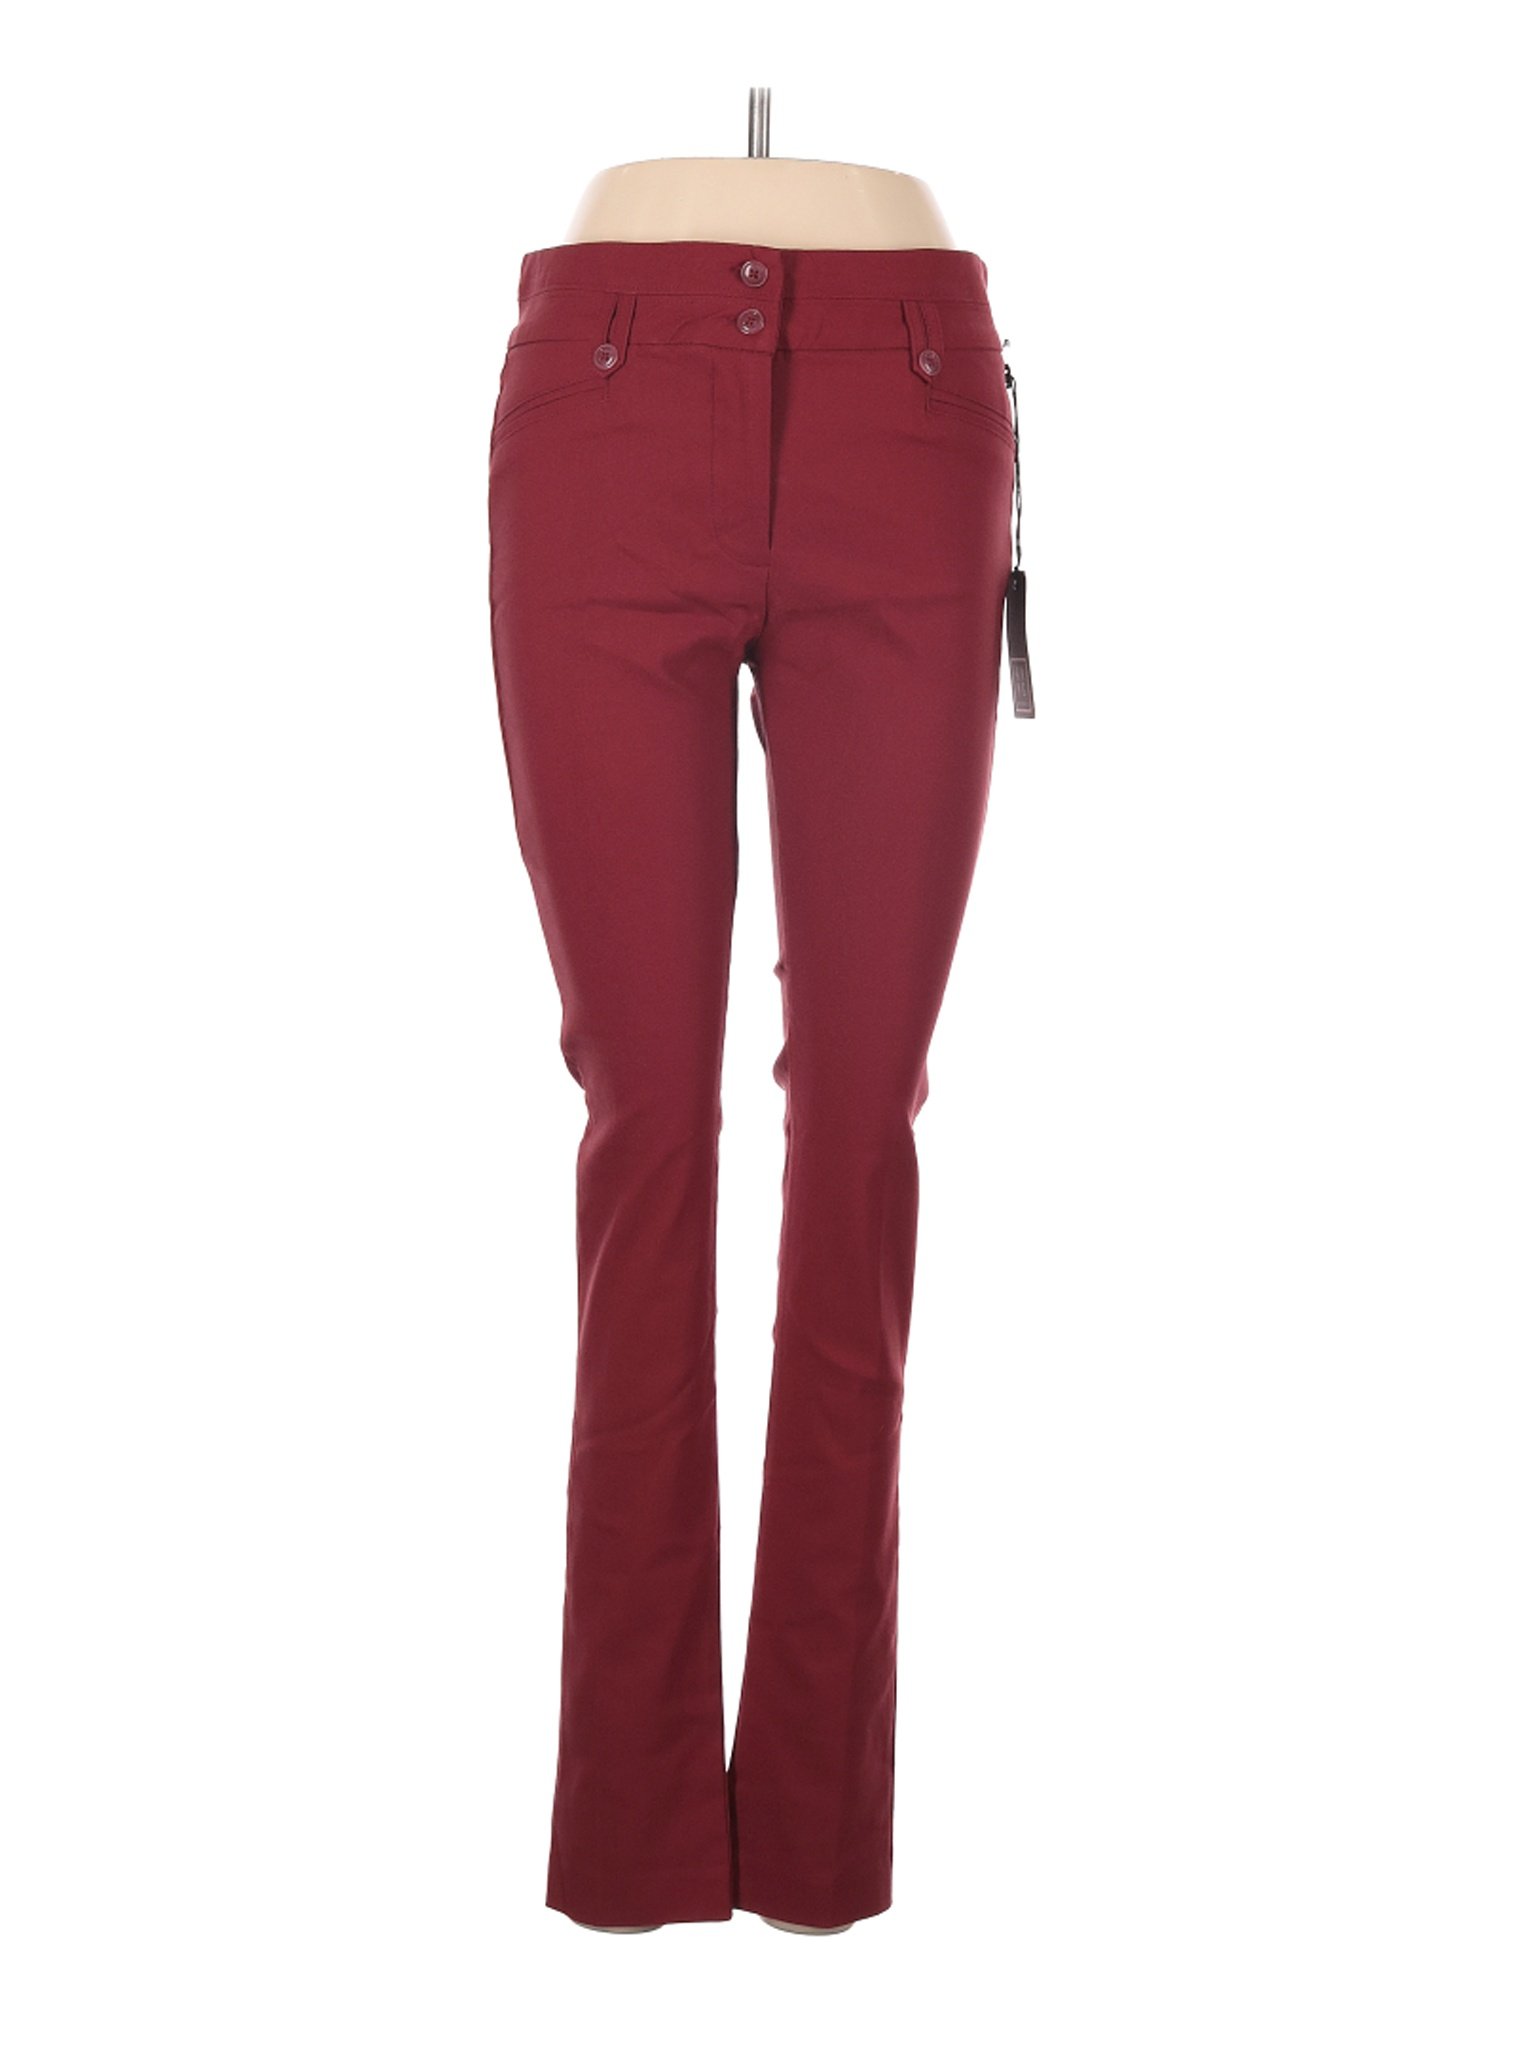 NWT Have Women Red Dress Pants M | eBay